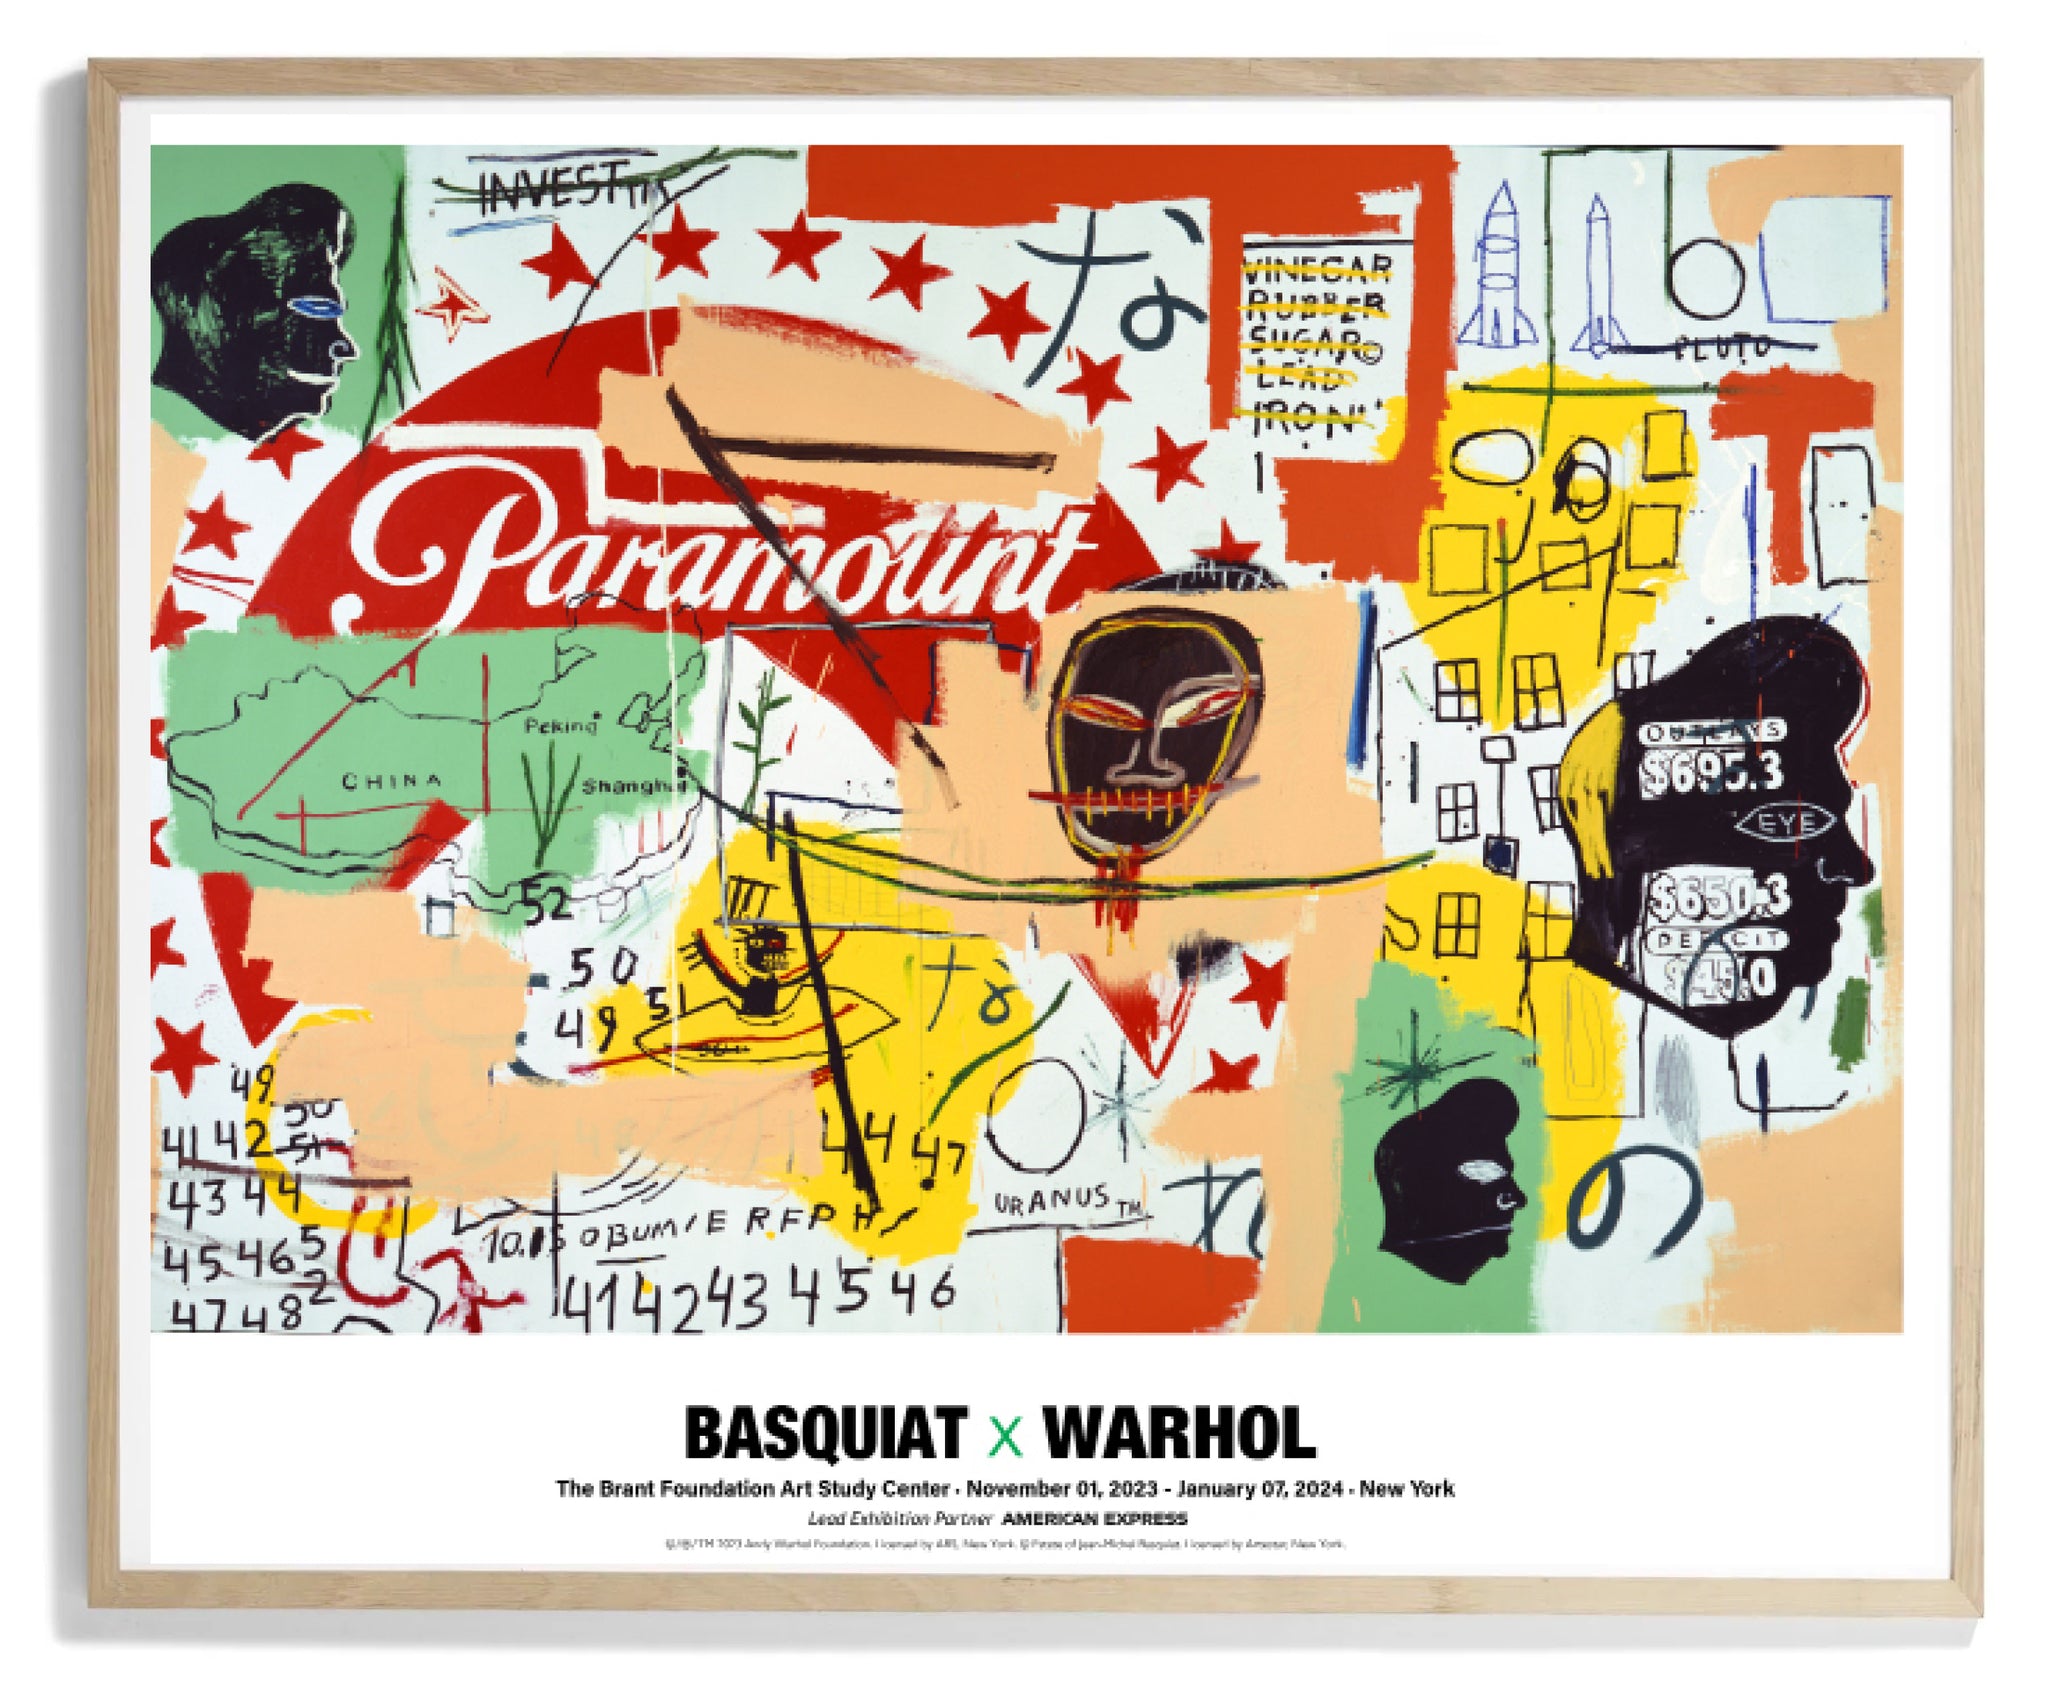 Basquiat x Warhol Exhibition Poster (Paramount,1984)